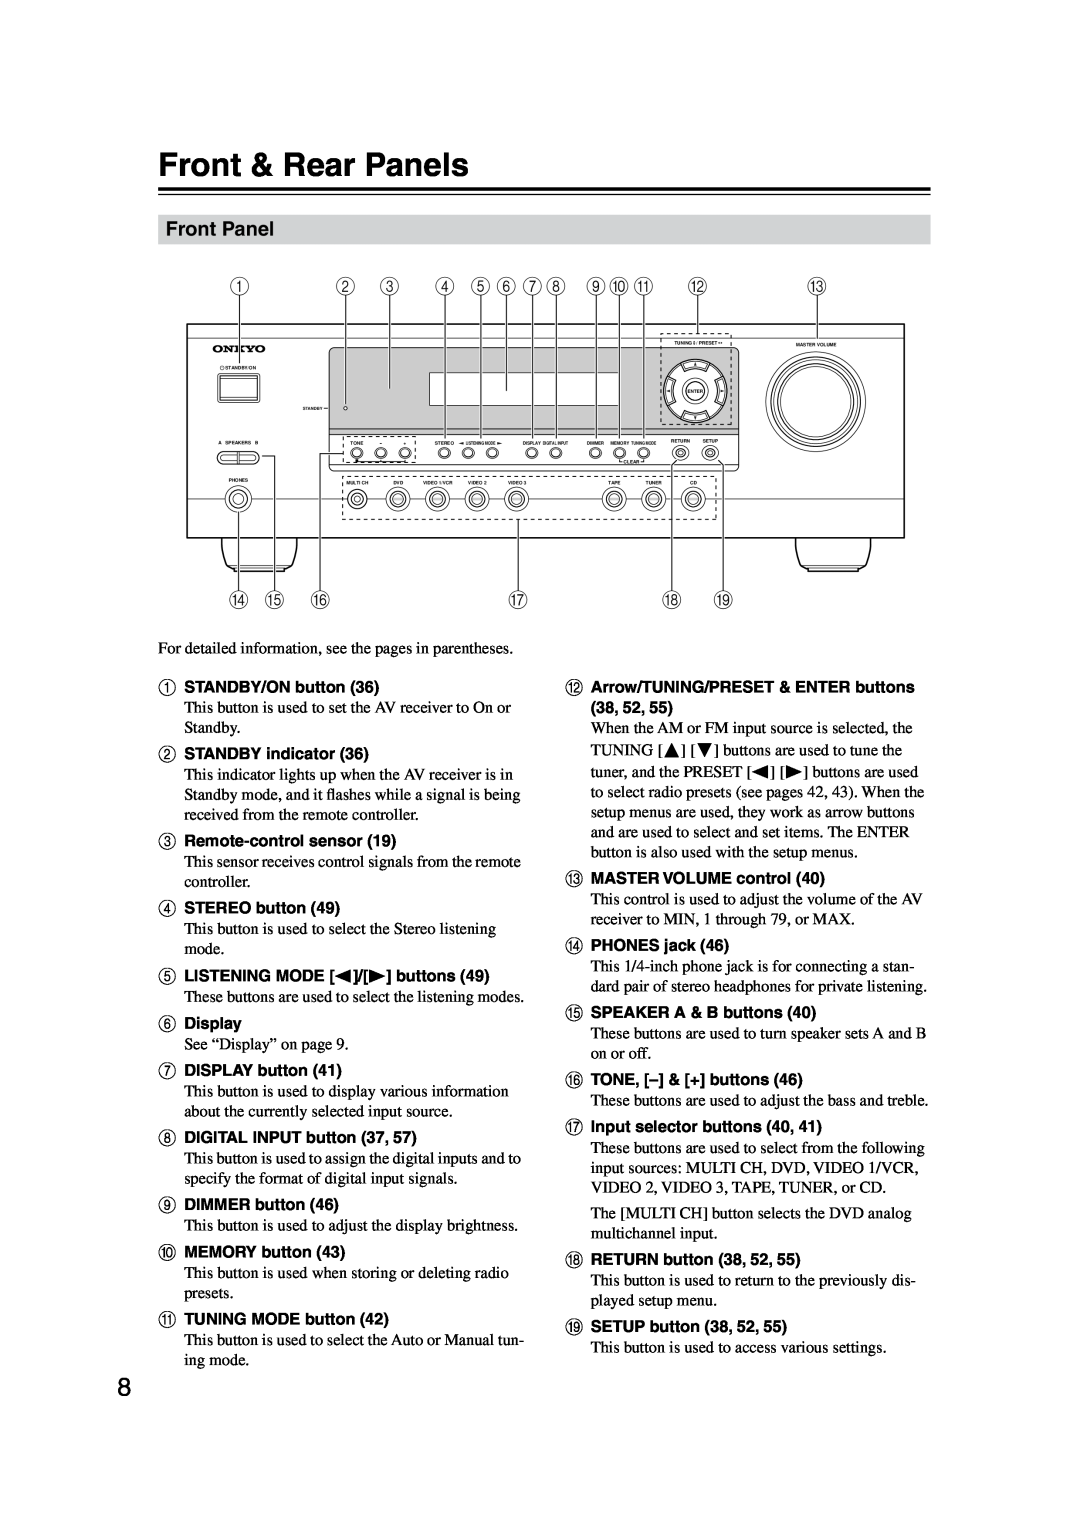 Onkyo HT-S4100 instruction manual Front & Rear Panels, 4 5 6 78 9JK, Front Panel 